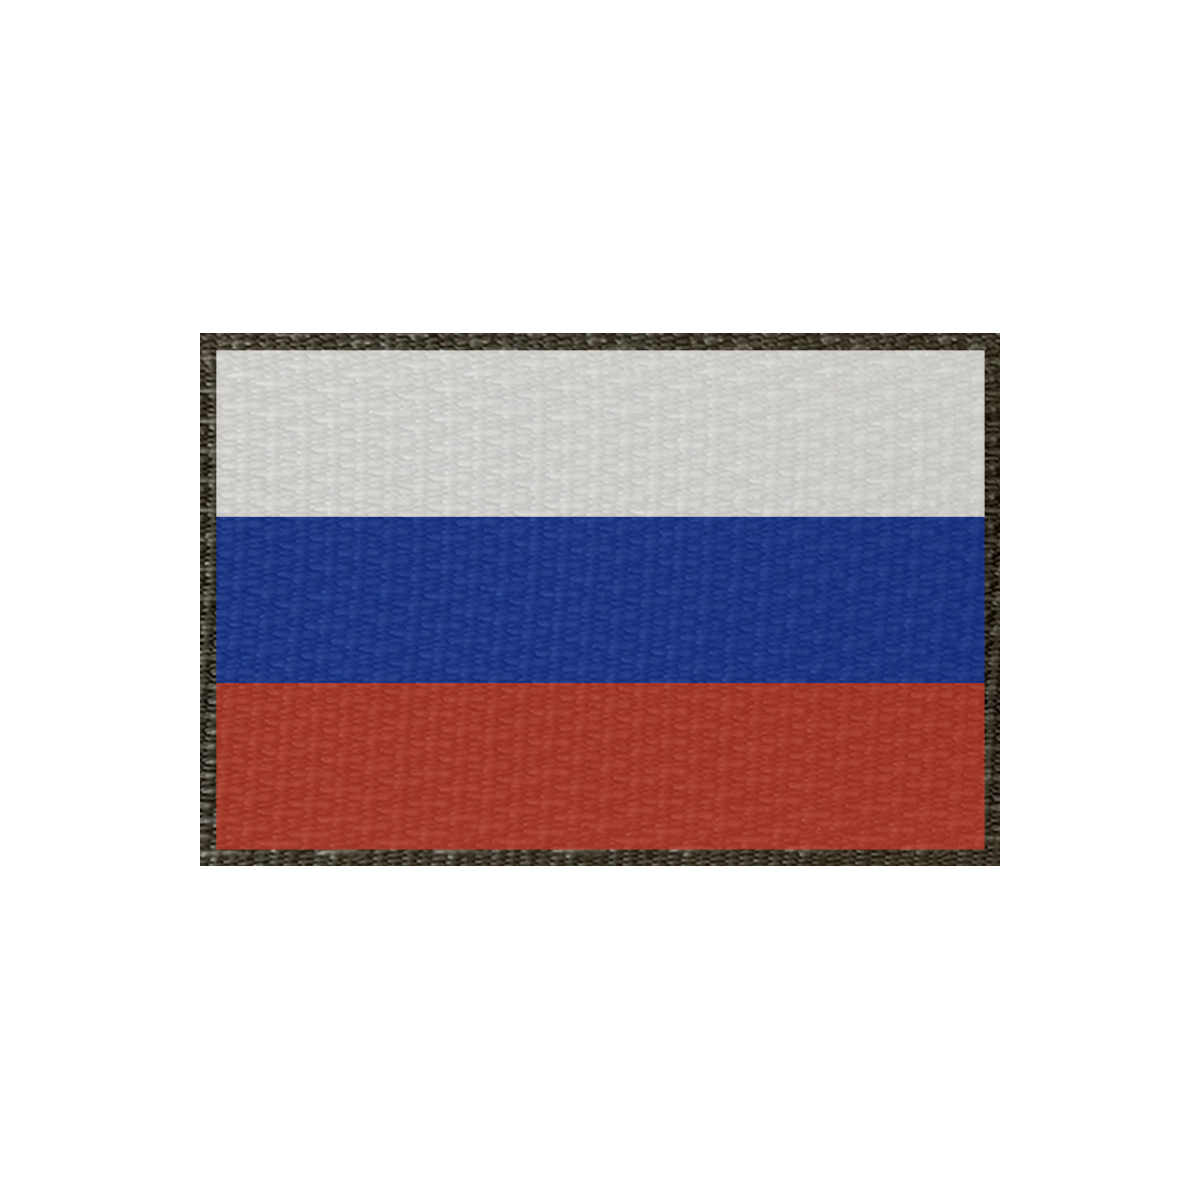 Patch Flagge Russland 75x50mm, Klett